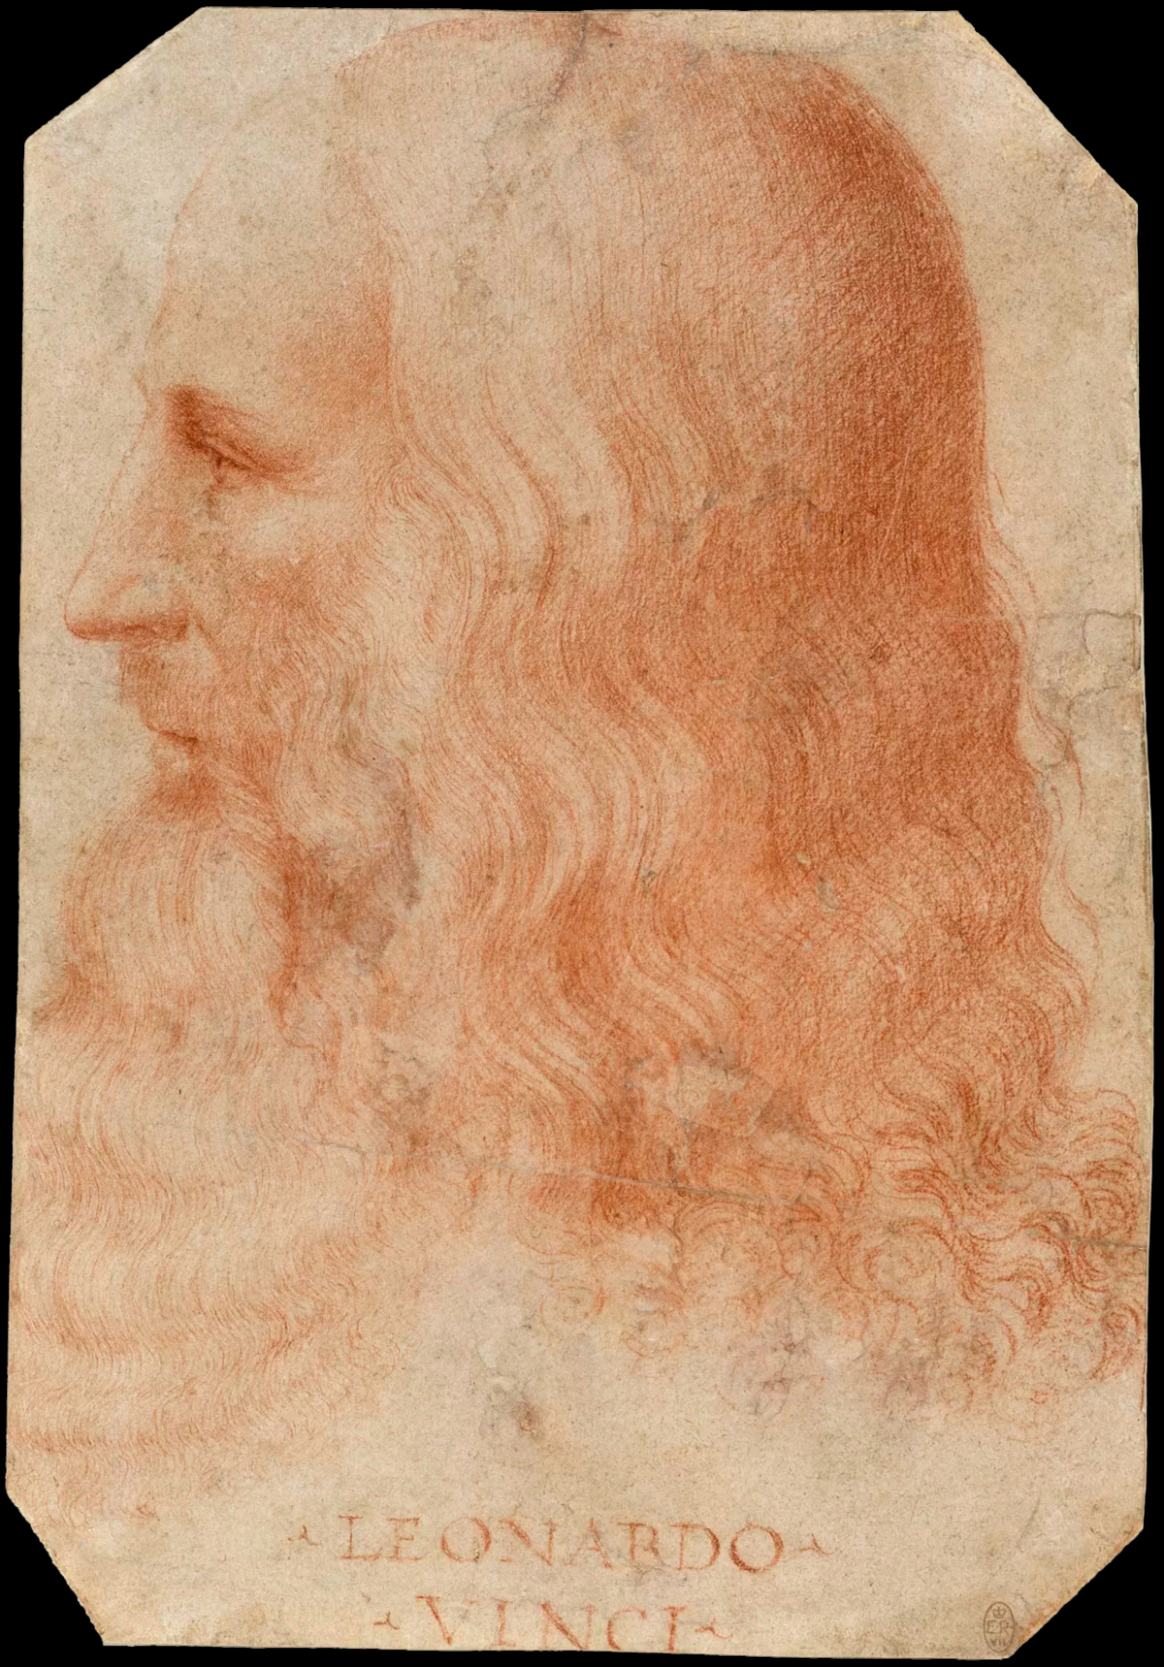 Leonardo Da Vinci Wikipedia Art Cles Near Me For 14 Year Olds